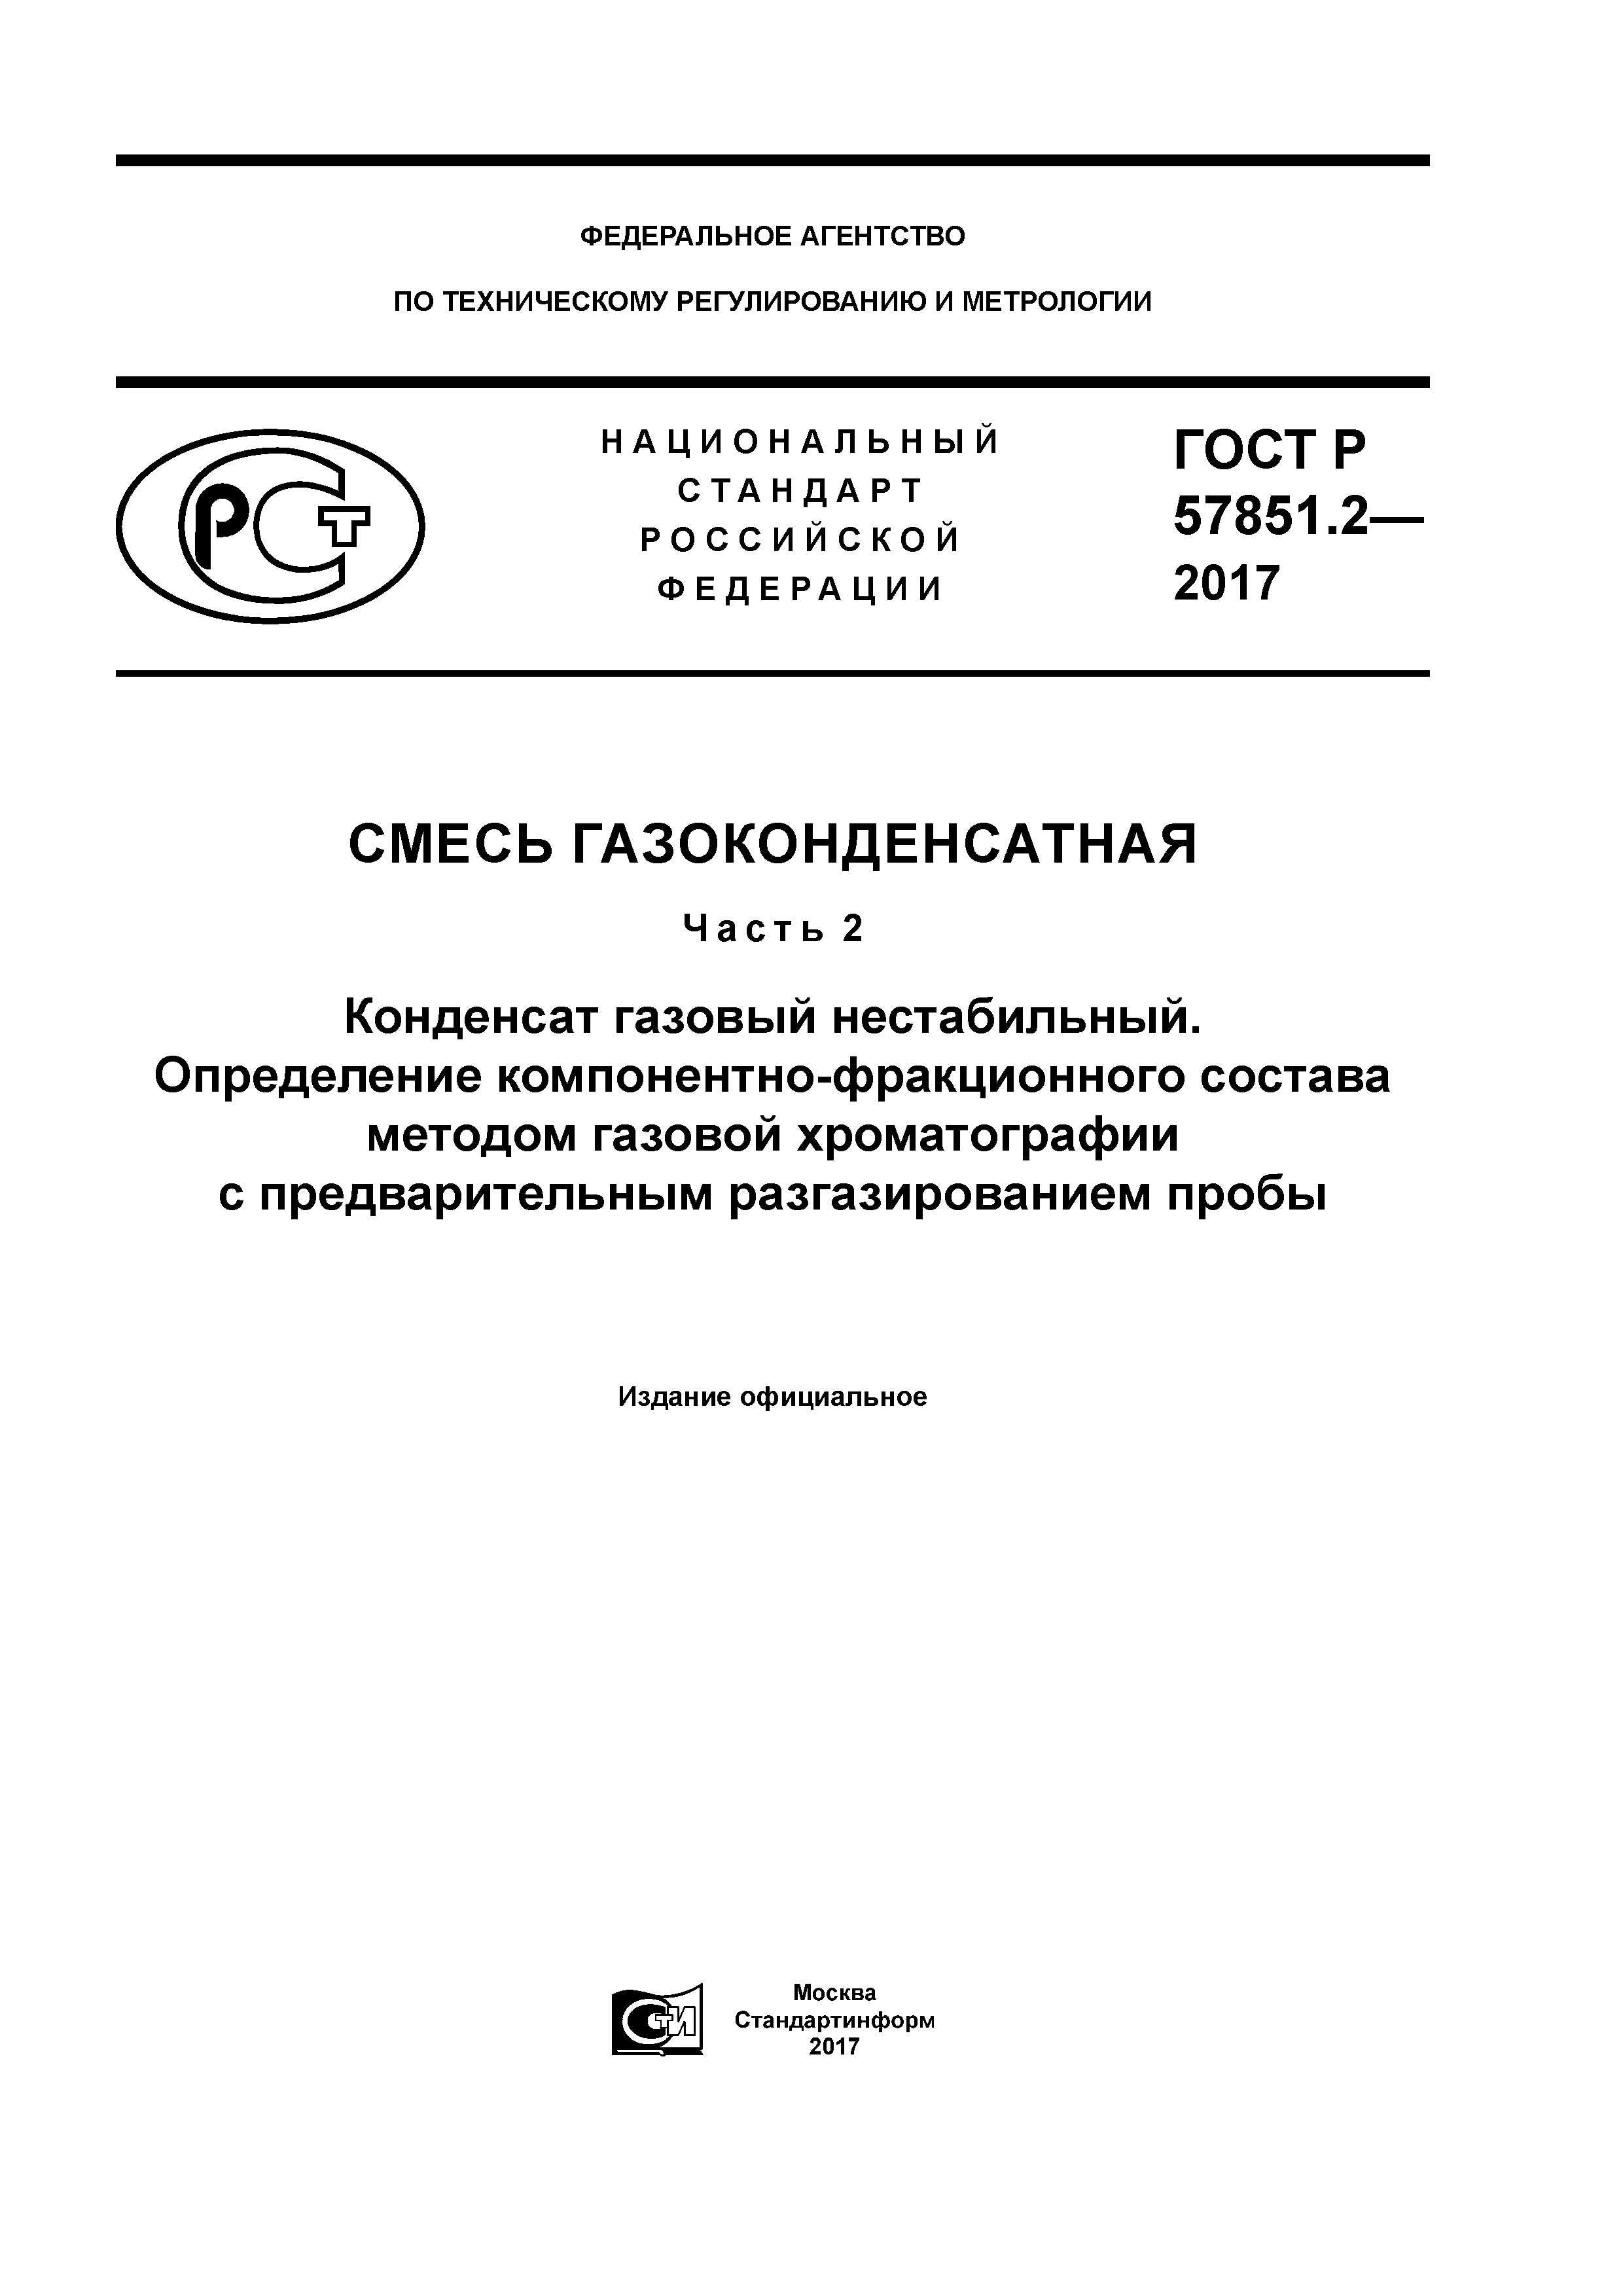 ГОСТ Р 57851.2-2017